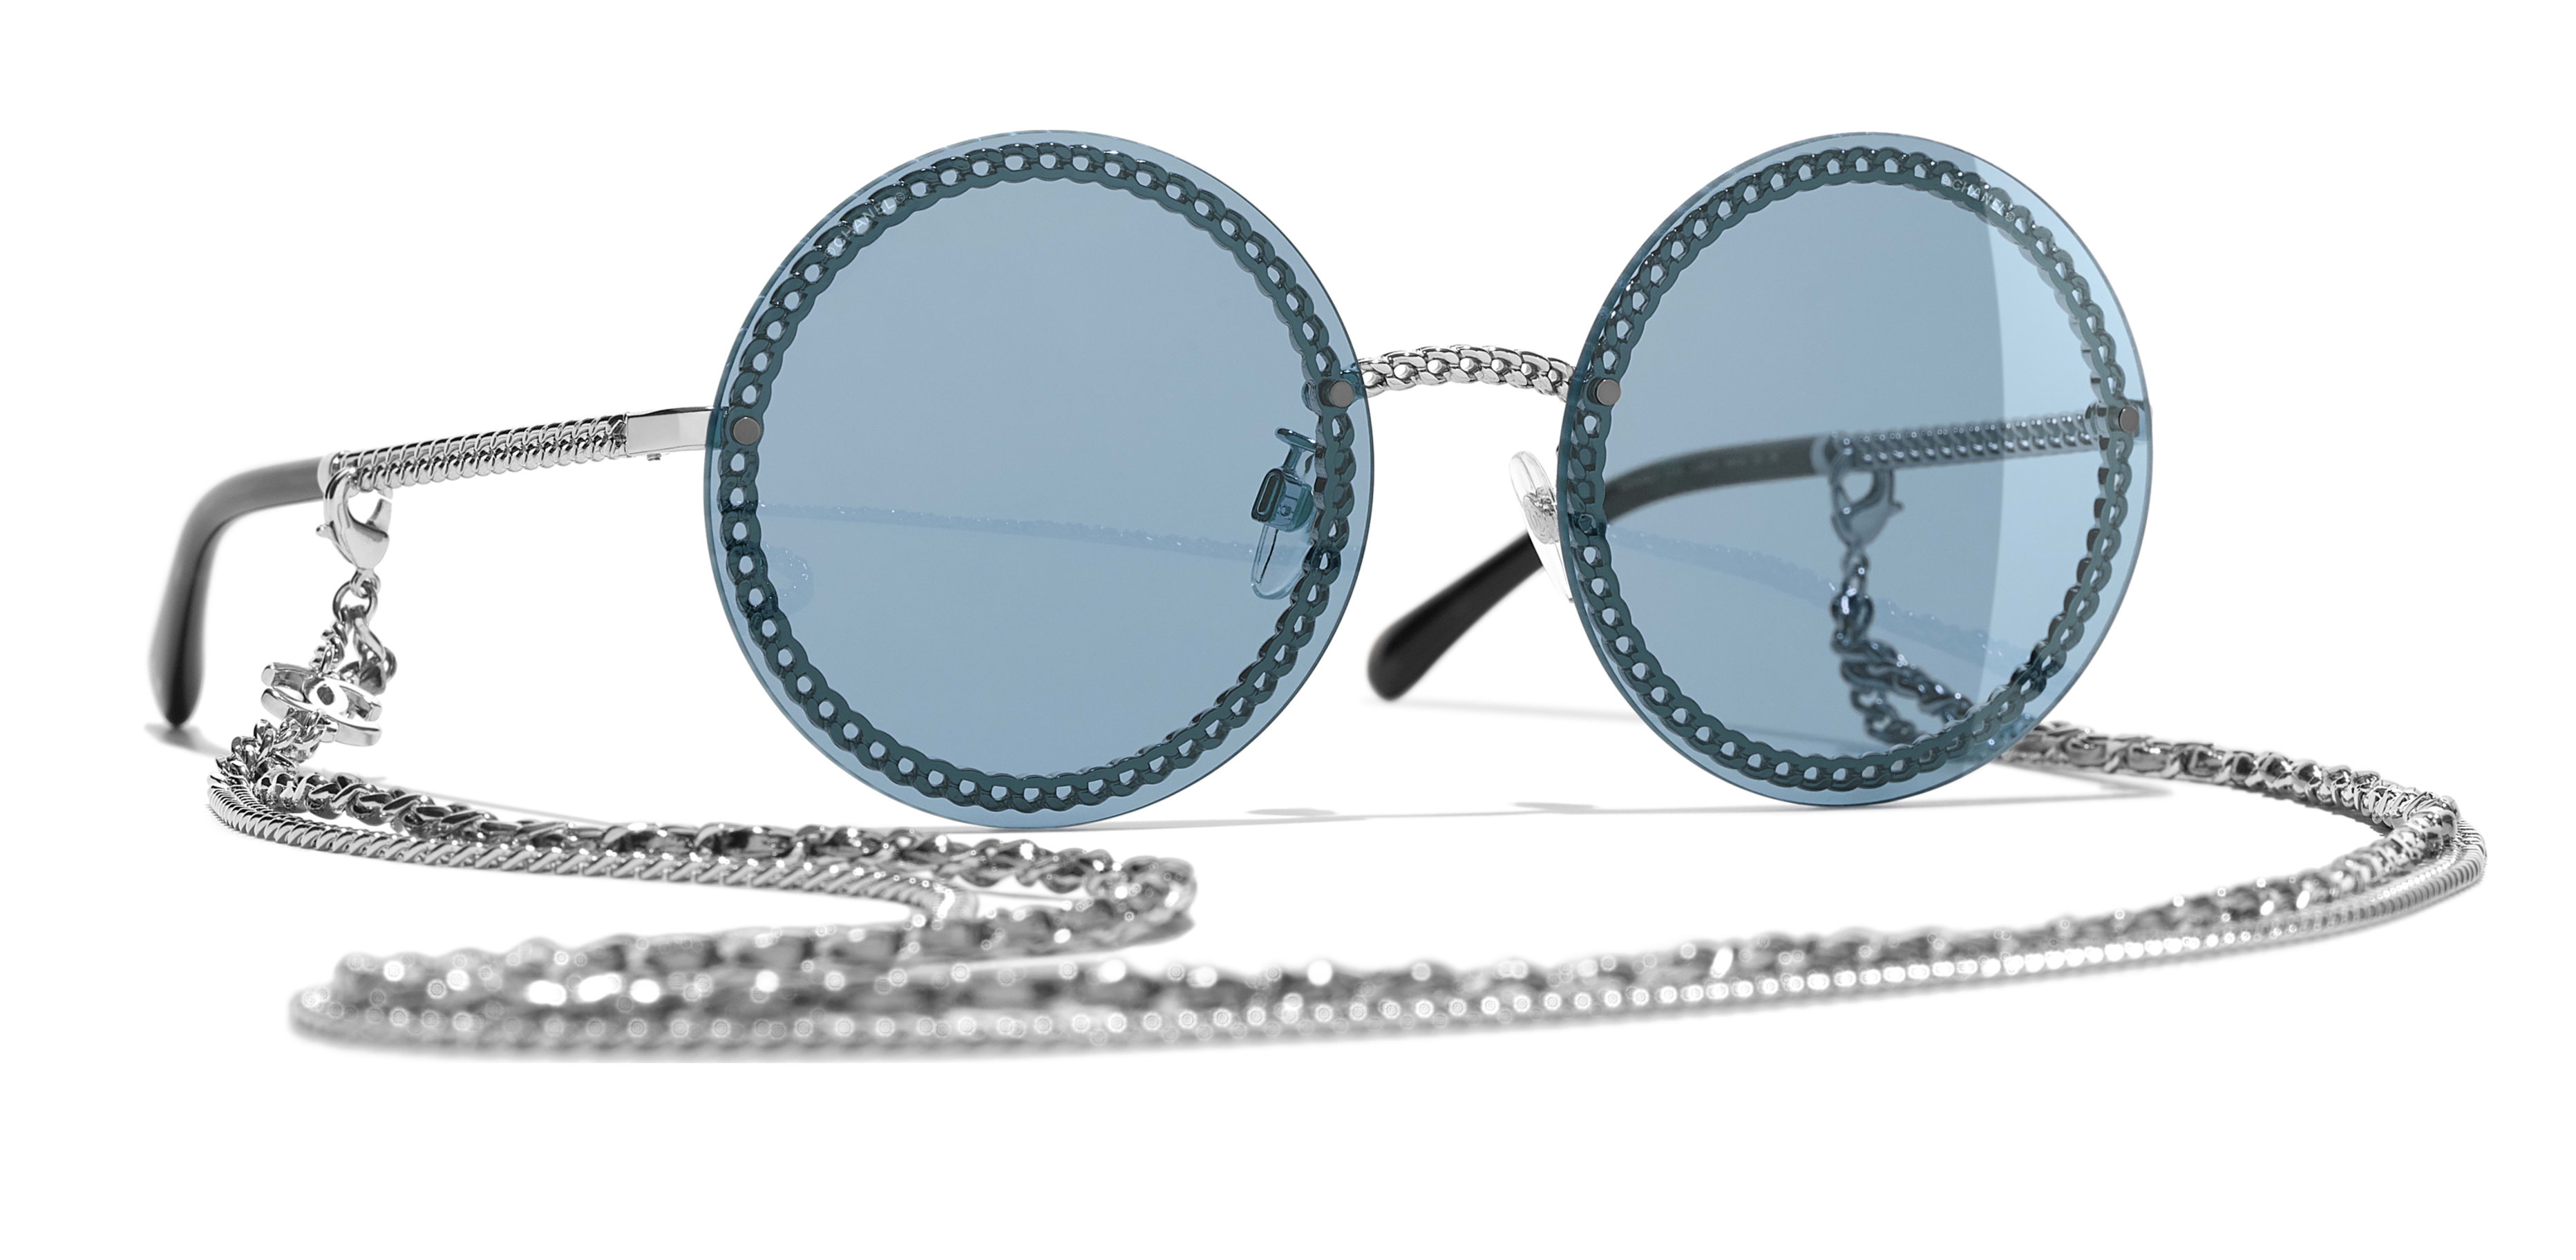 Chanel - Round Sunglasses - Silver Light Blue - Chanel Eyewear